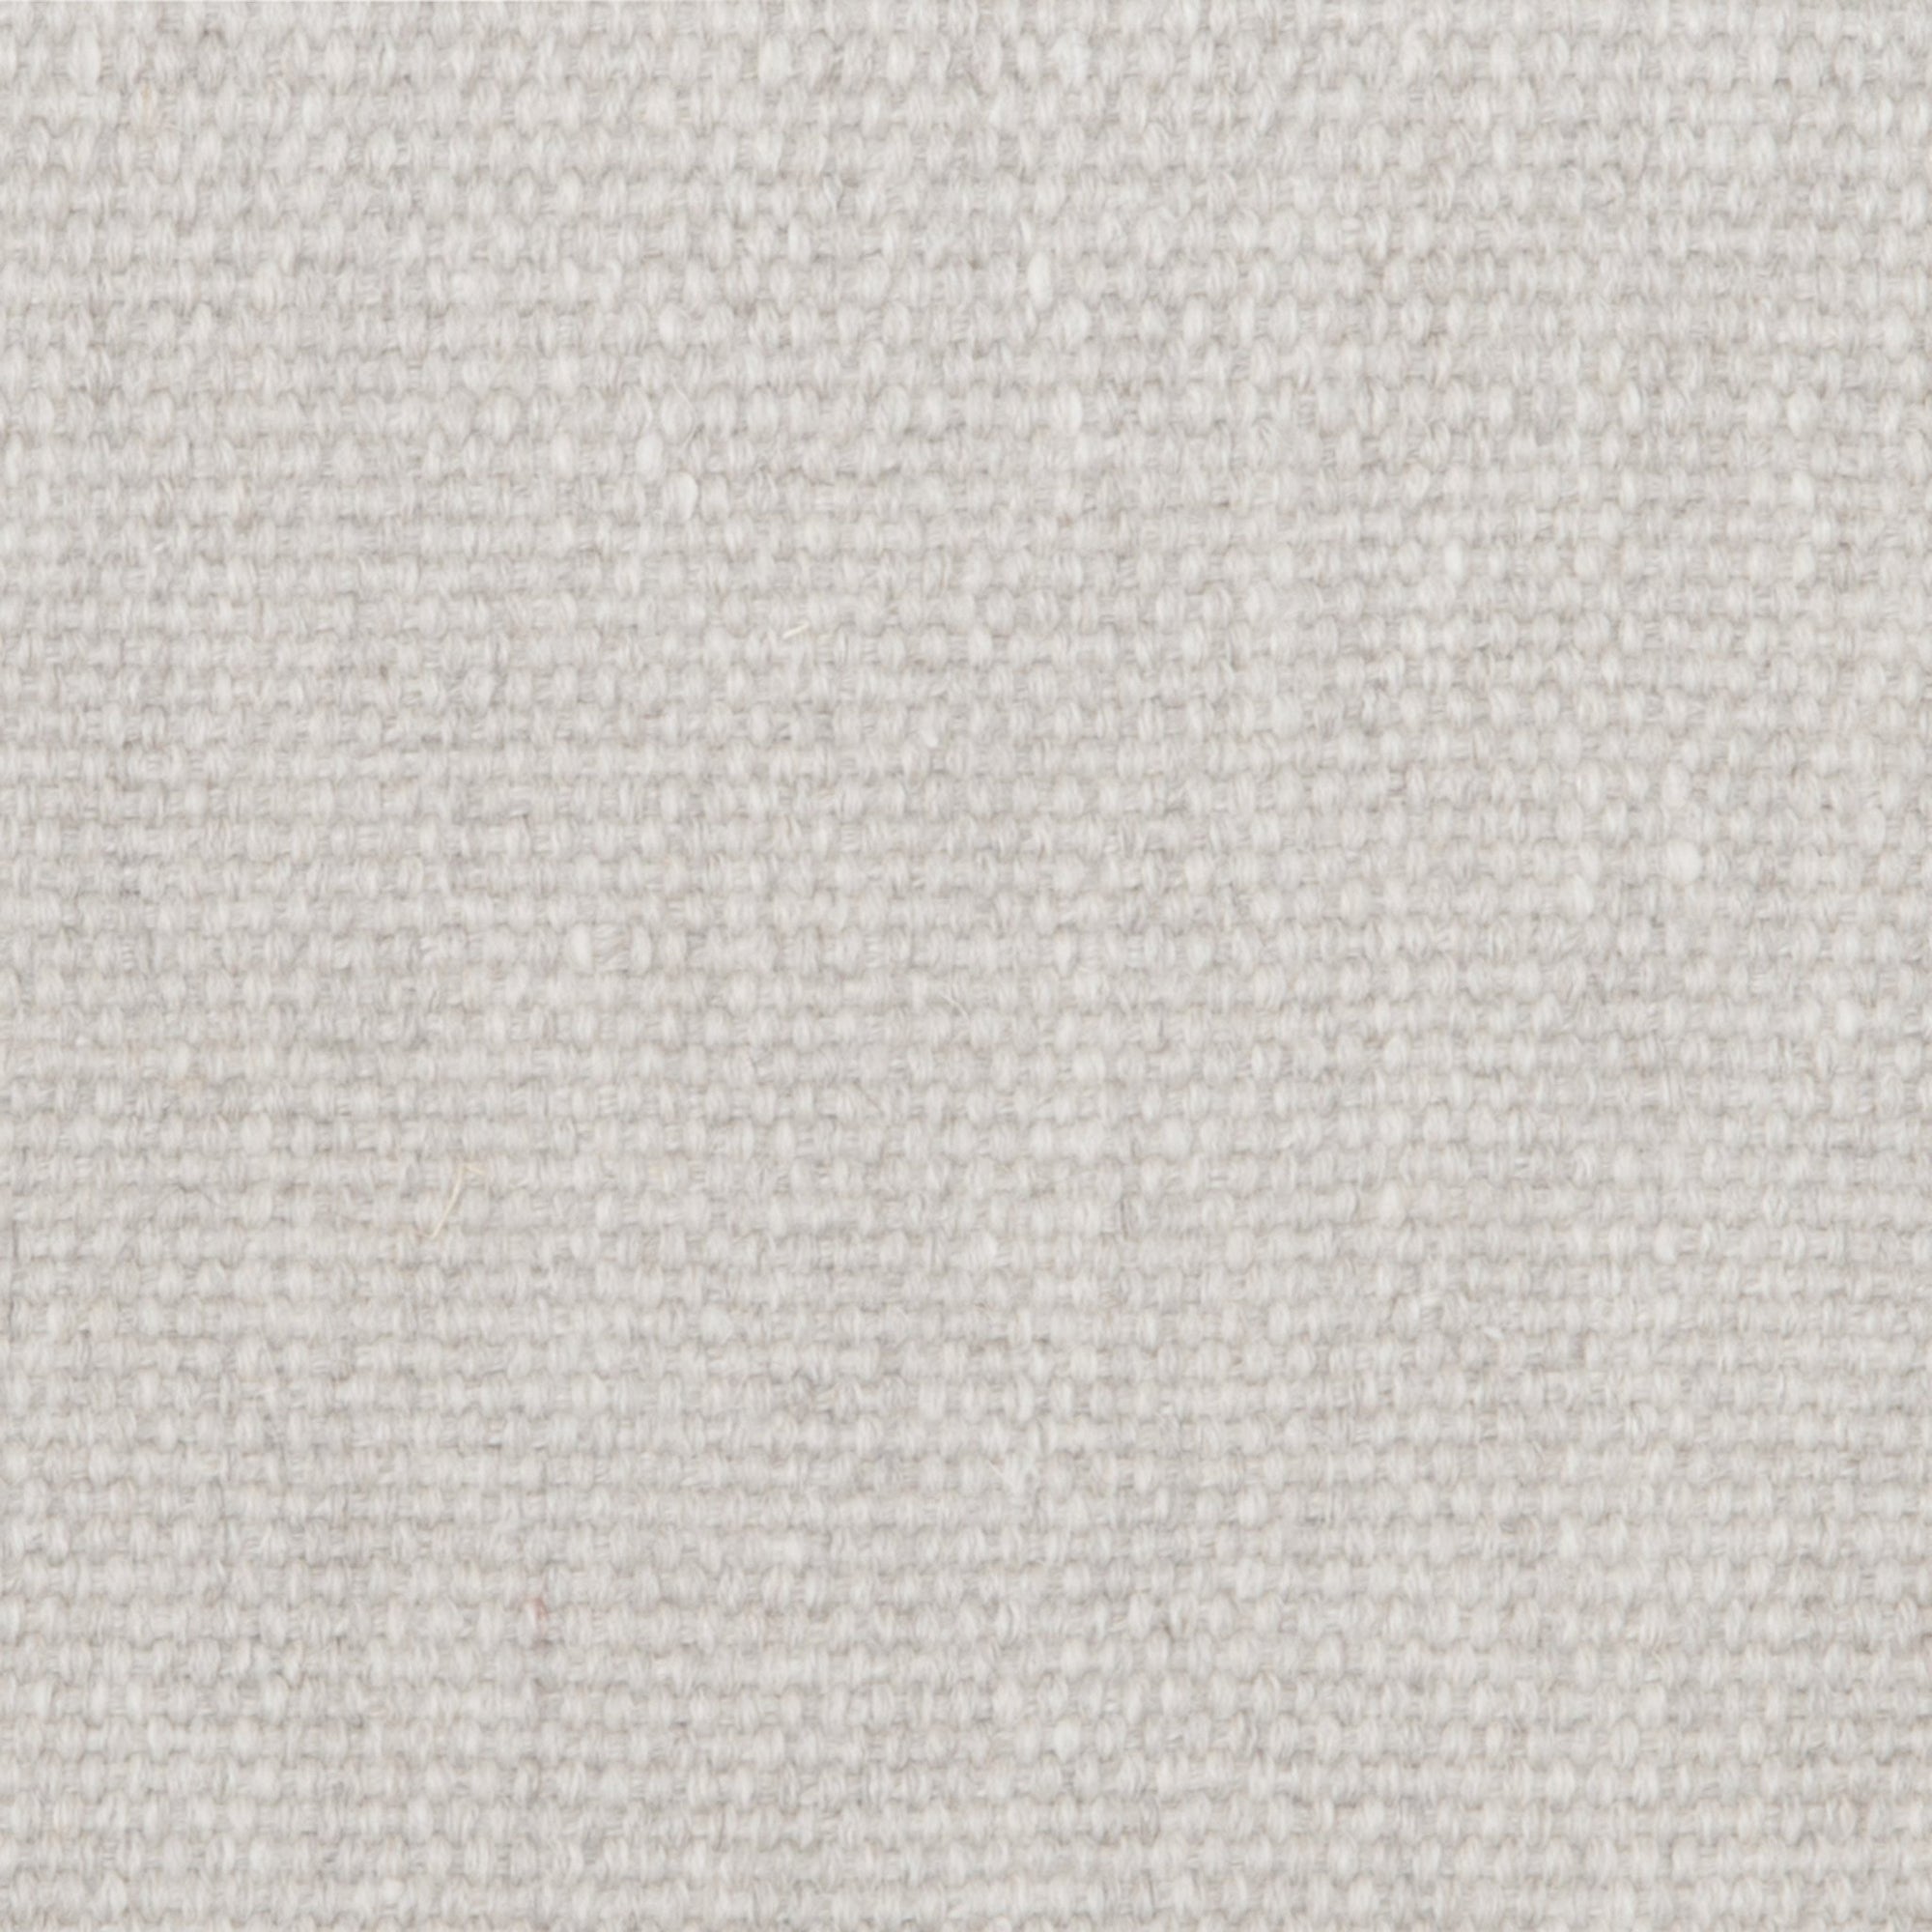 Alpaca Linen Plush Fabric - Rosemary Hallgarten